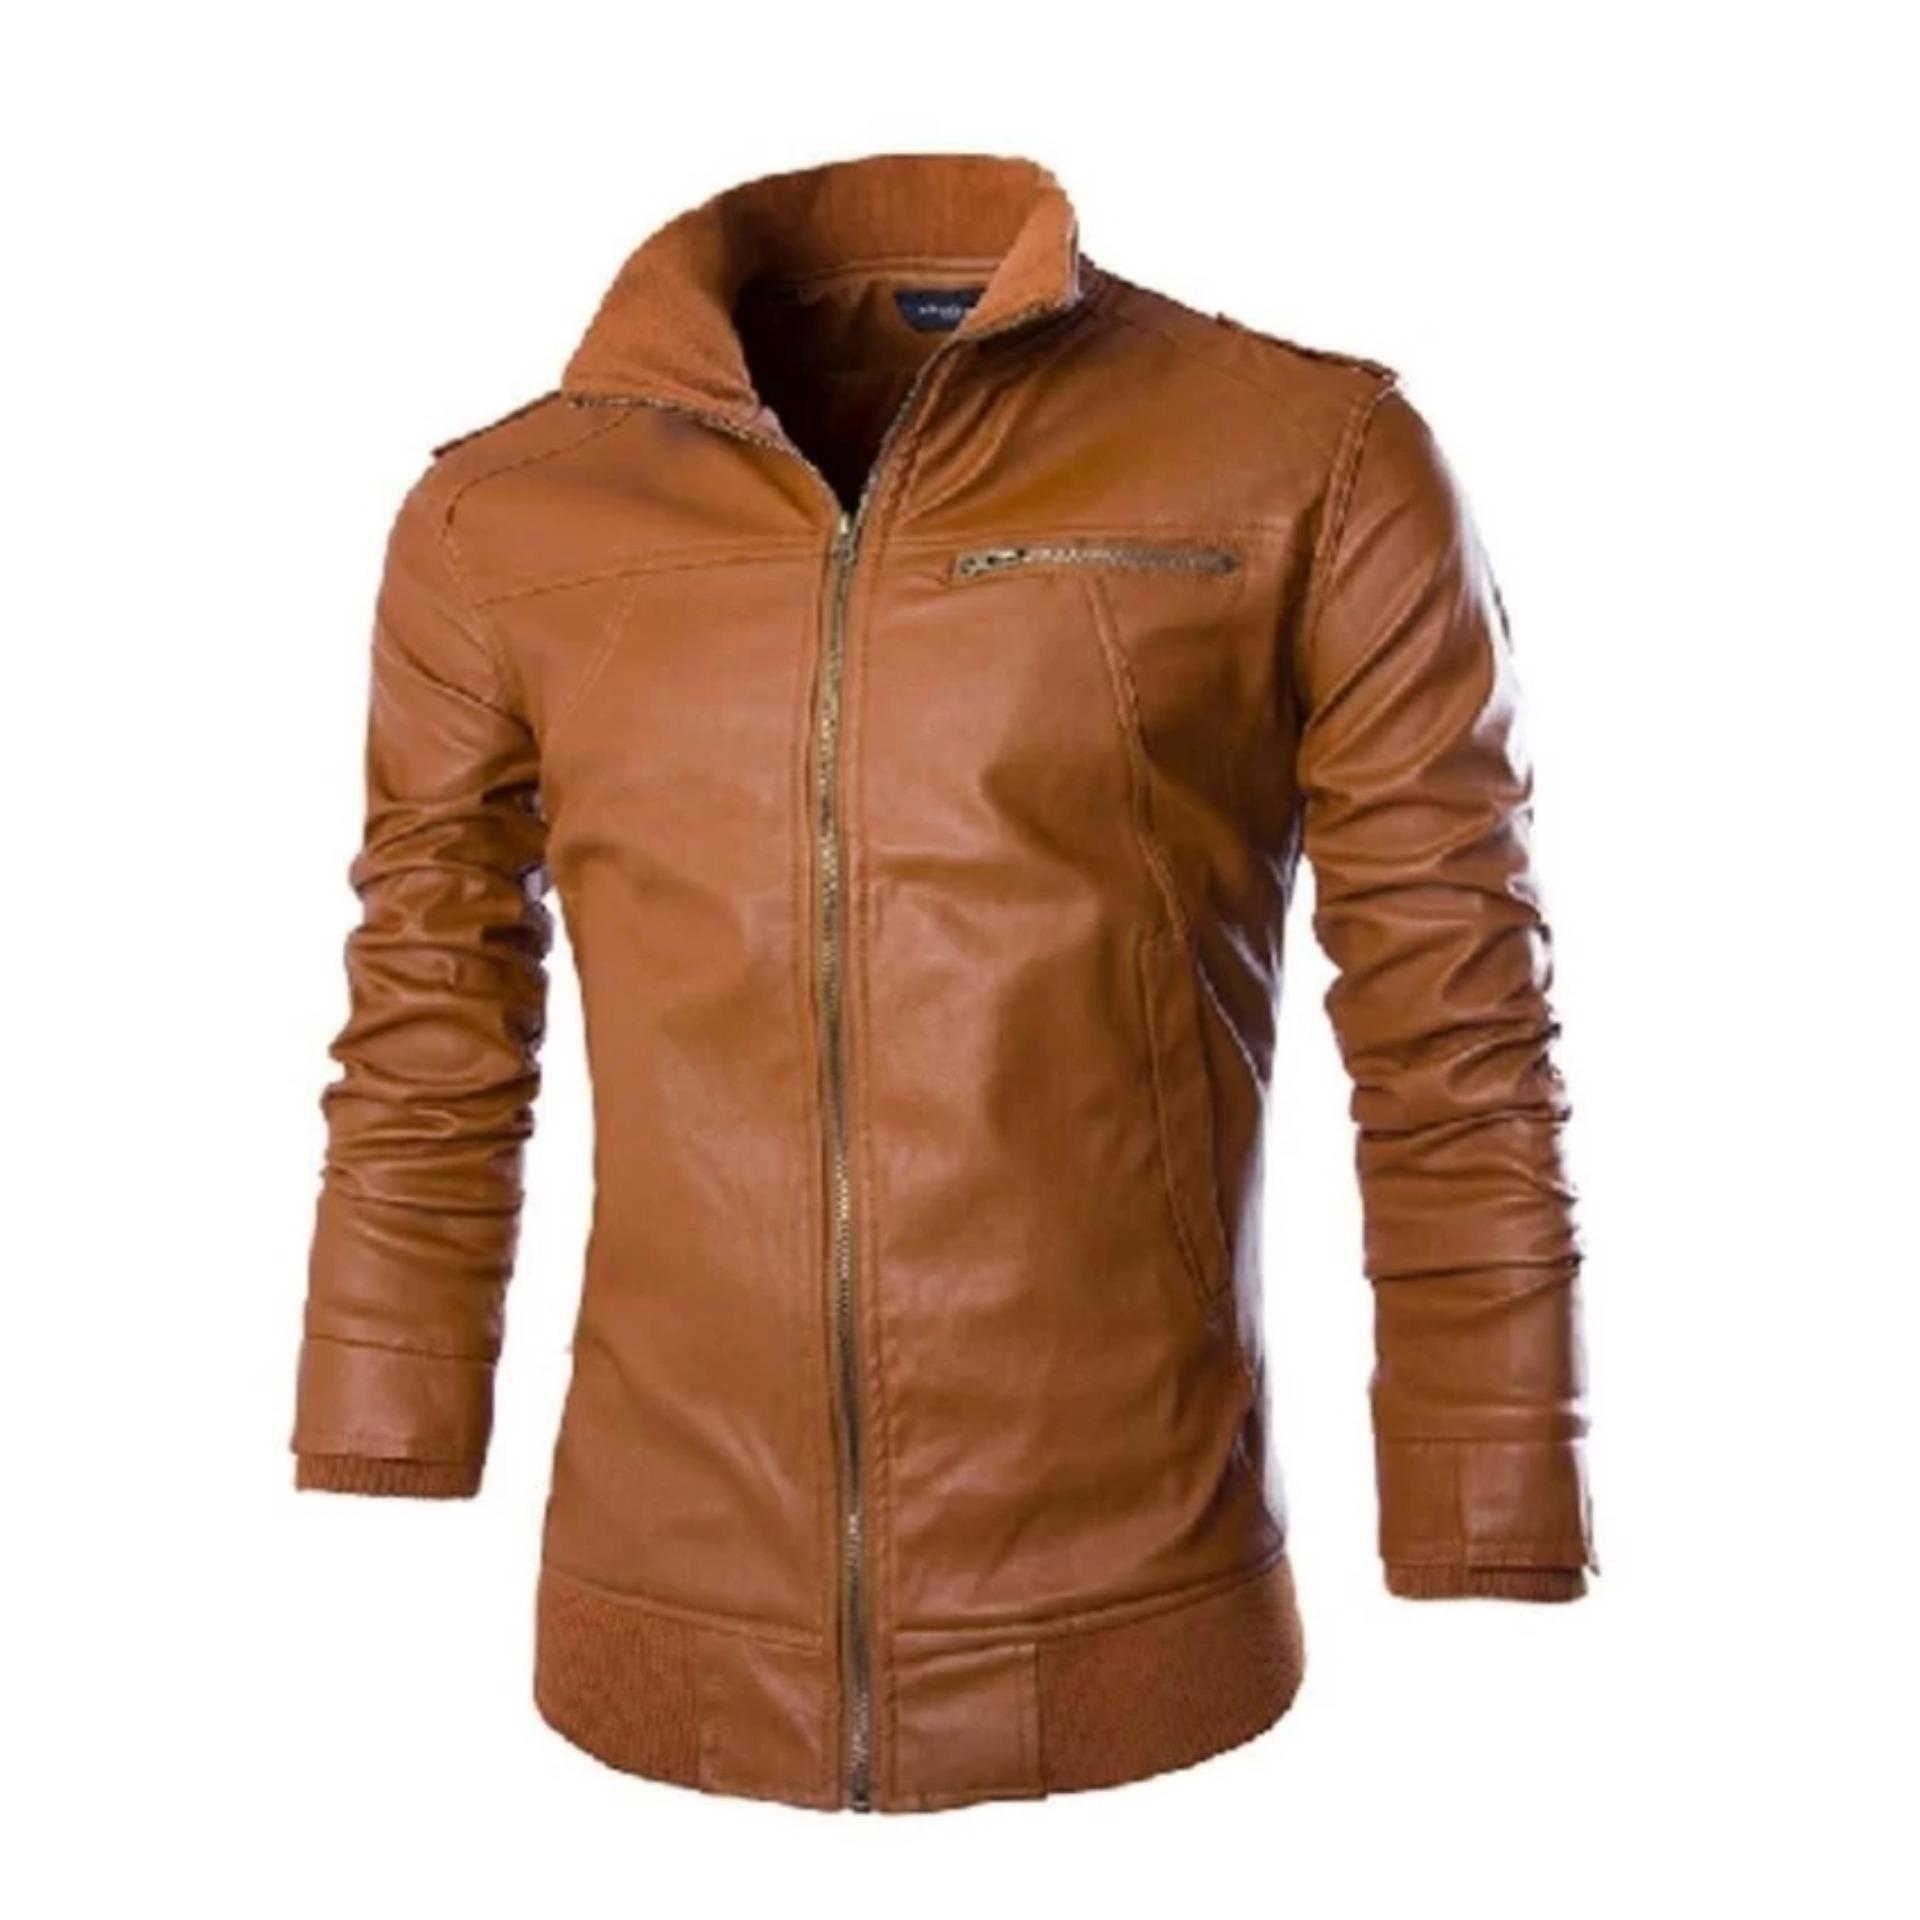 prada leather jacket price